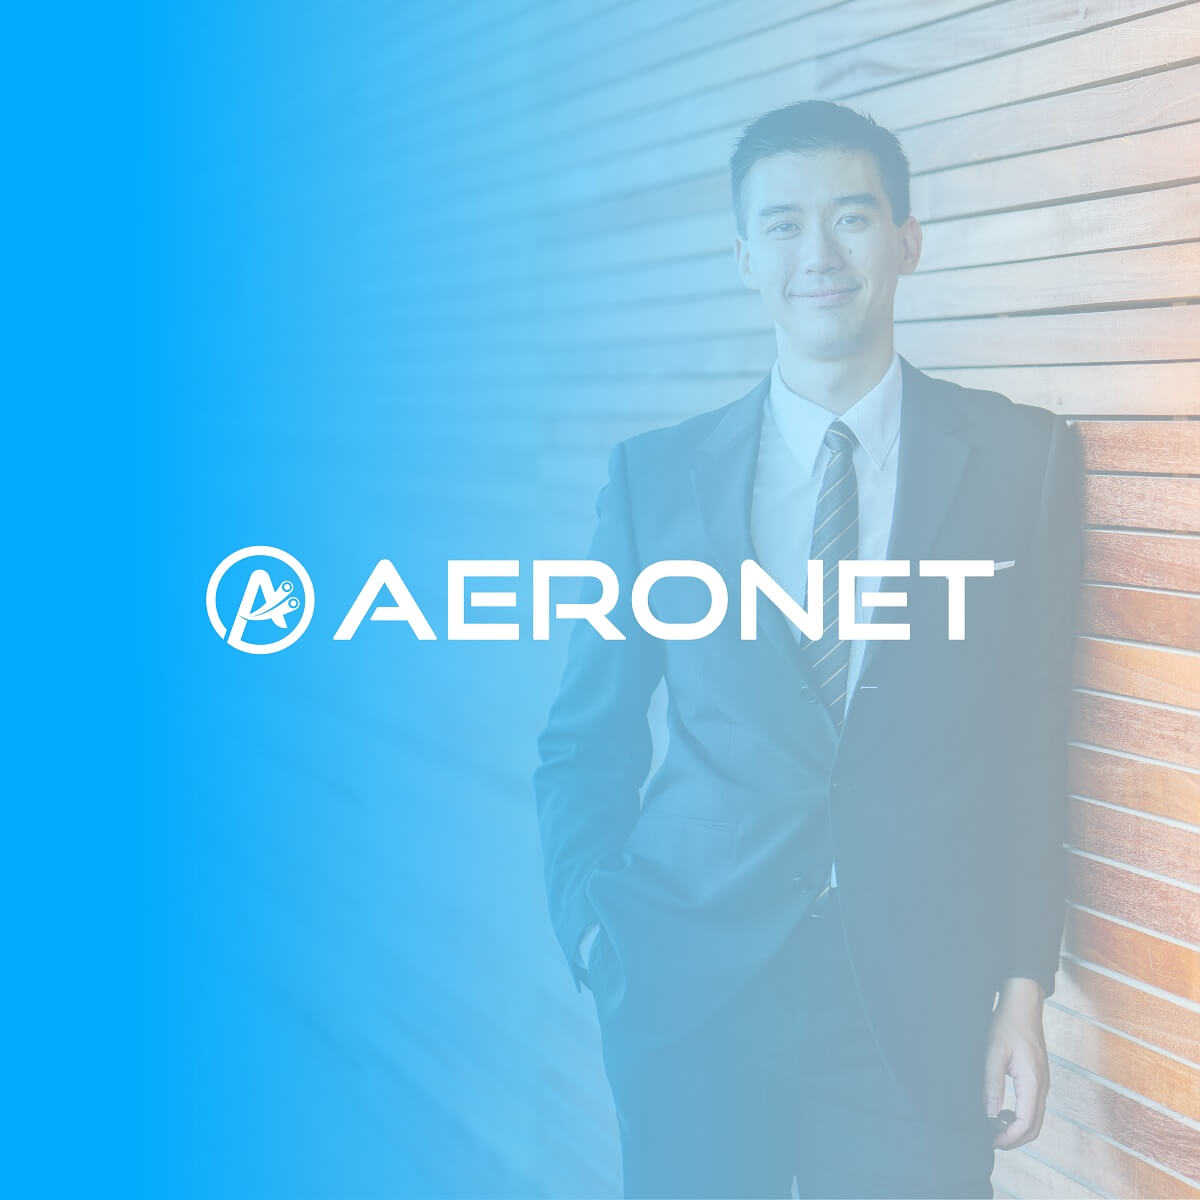 Aeronet (2)